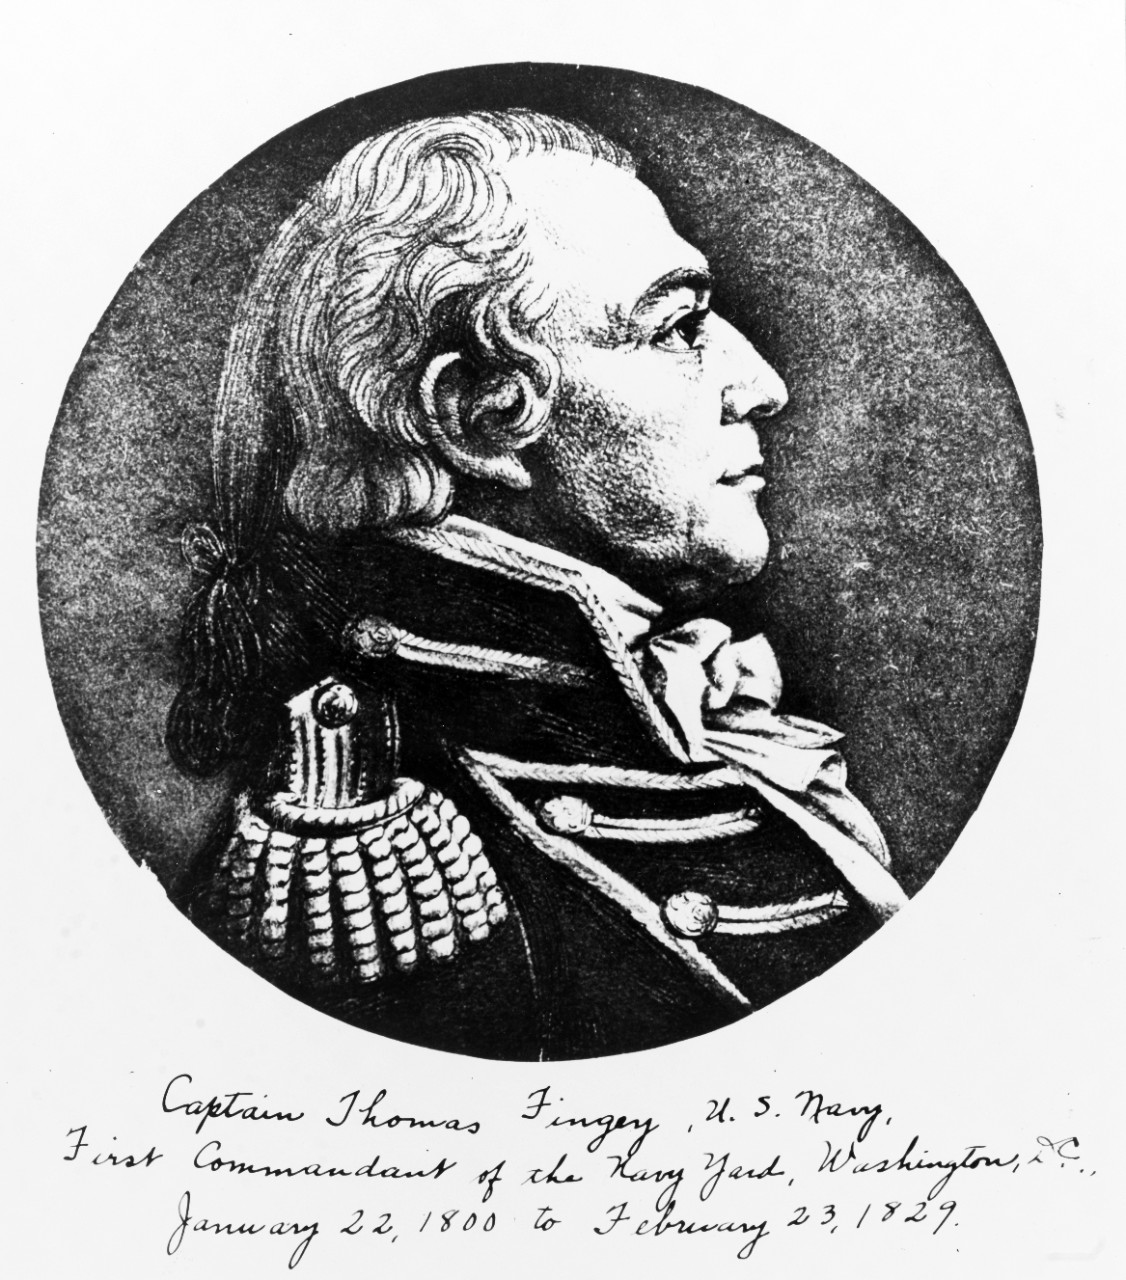 Captain Thomas Tingey, USN